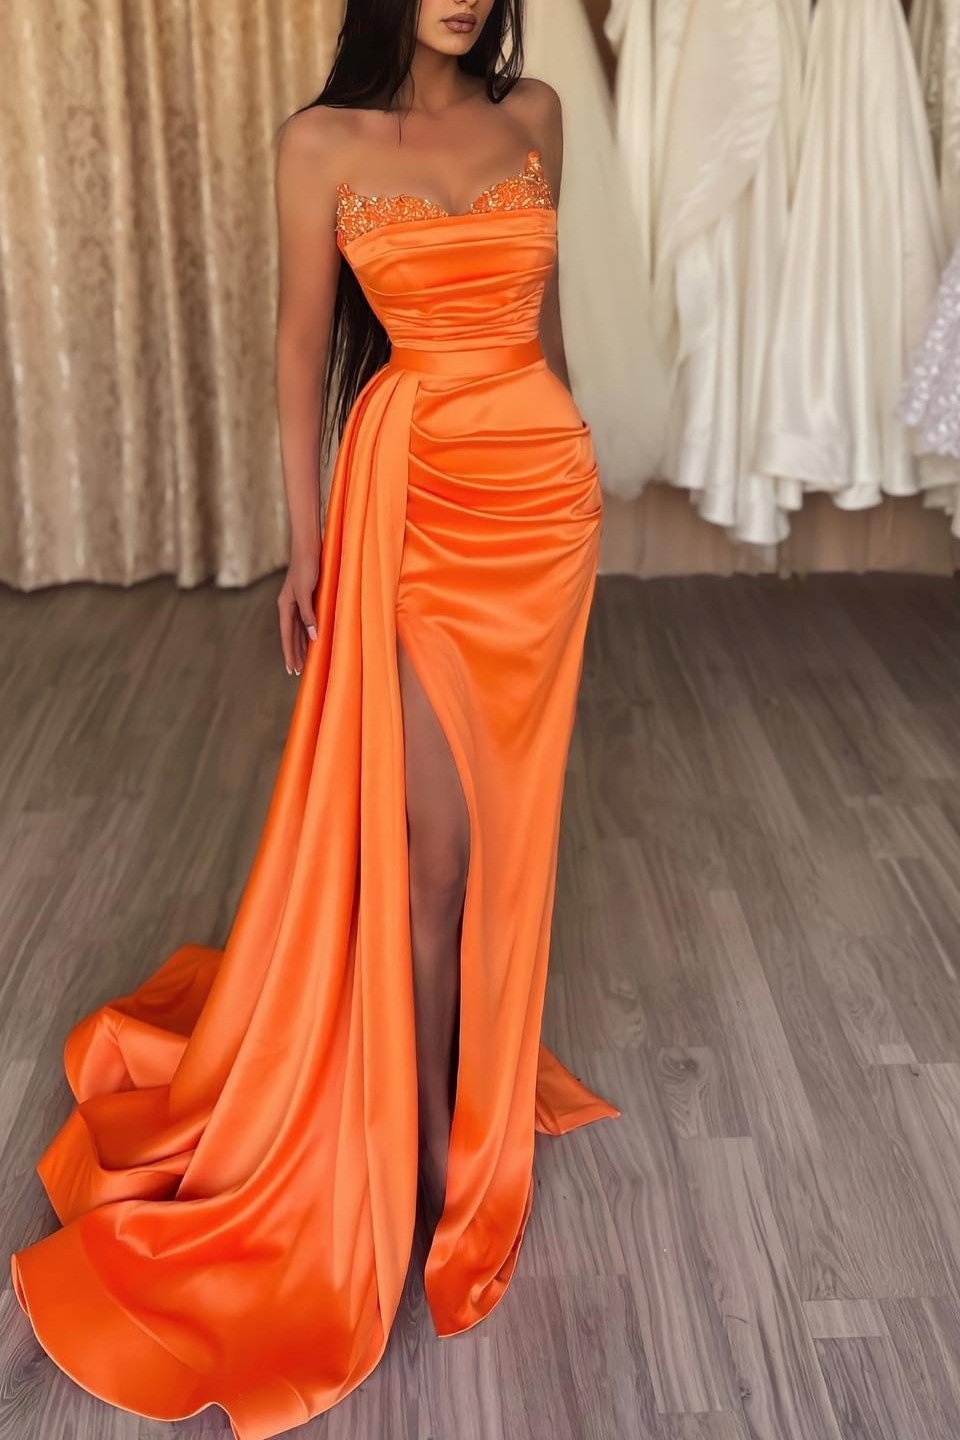 Luluslly Orange Sweetheart Mermaid Prom Dress Split Long With Sequins Ruffles